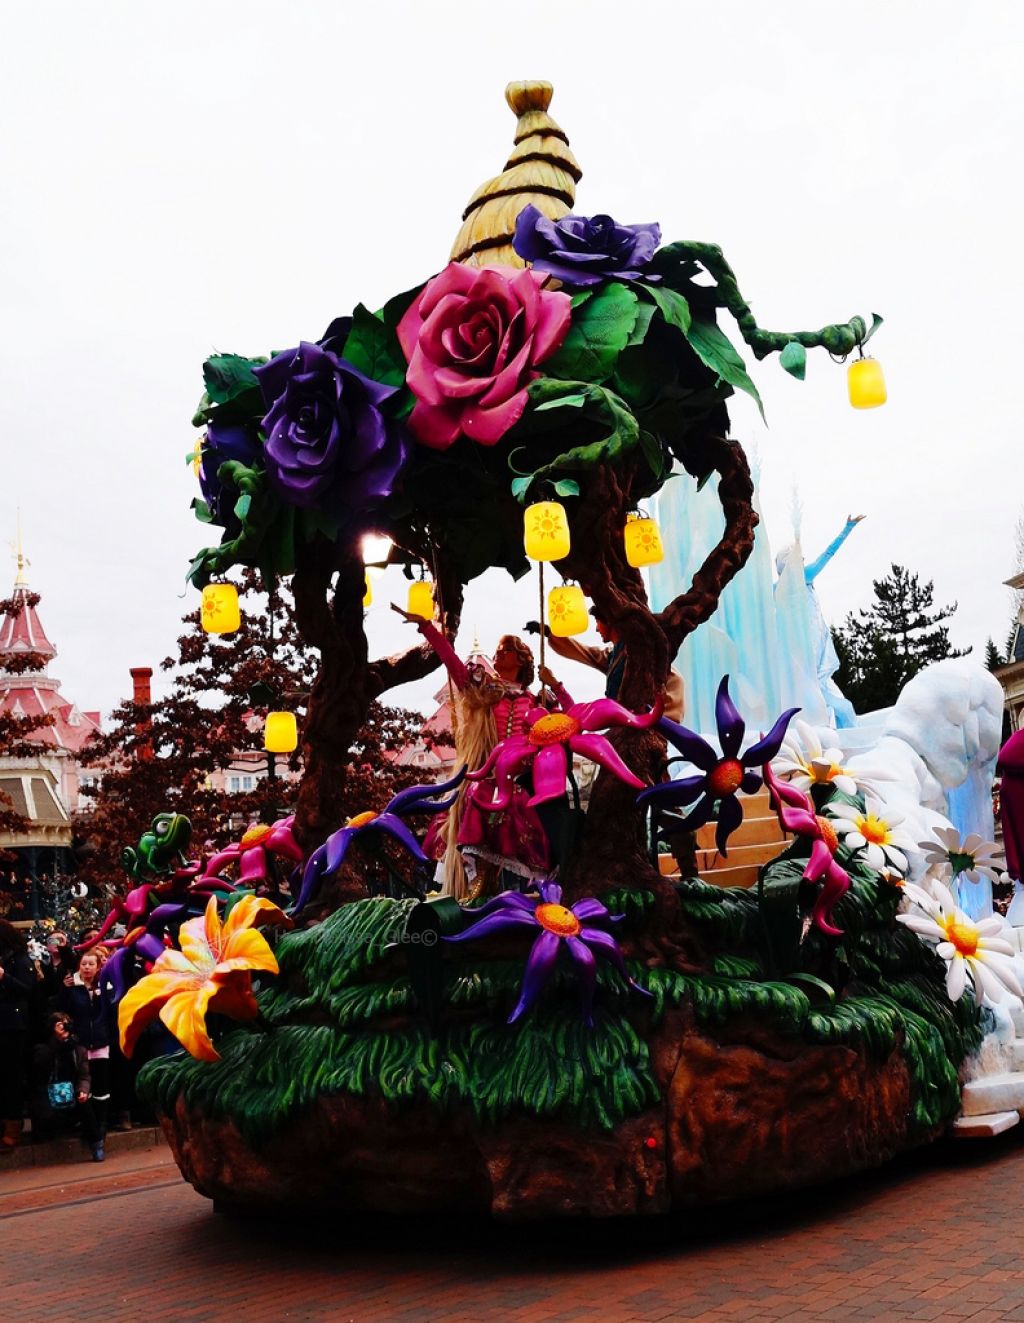 disneyland paris9 Disney Magic on Parade, Disneyland Paris